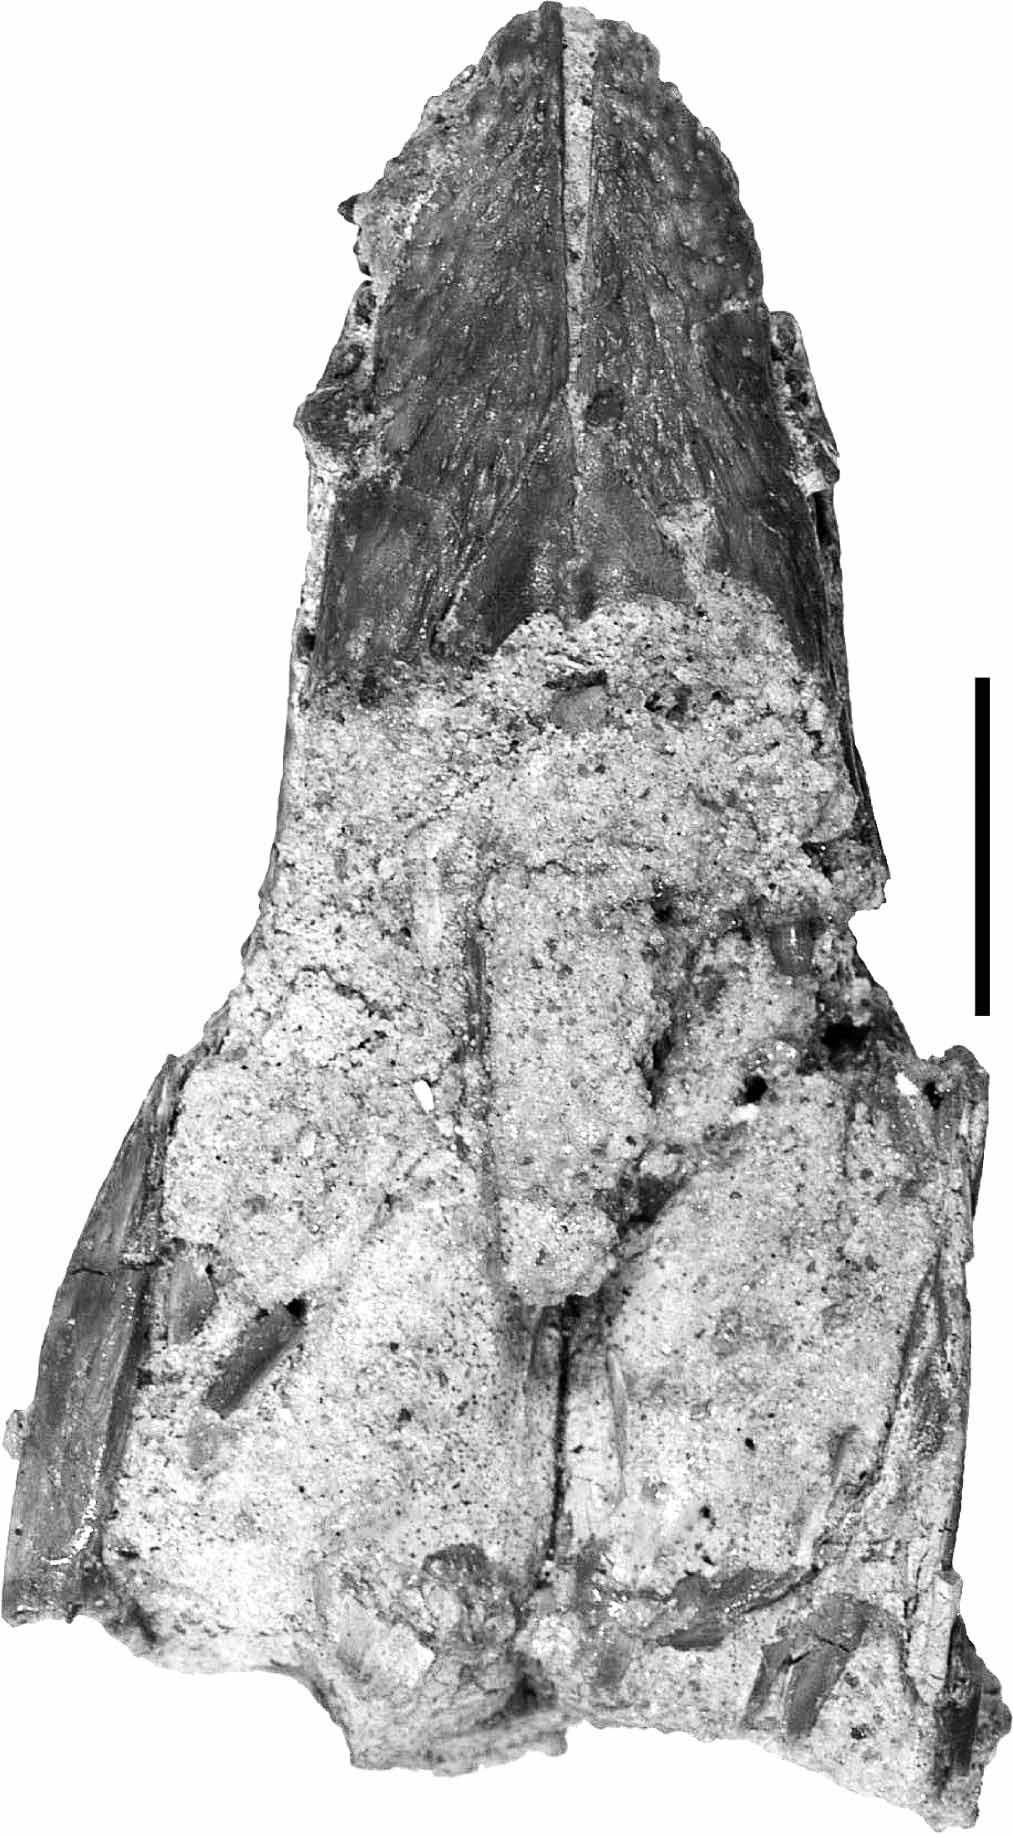 270 A. H. Turner Figure 11. UA 8720, Araripesuchus tsangatsangana.